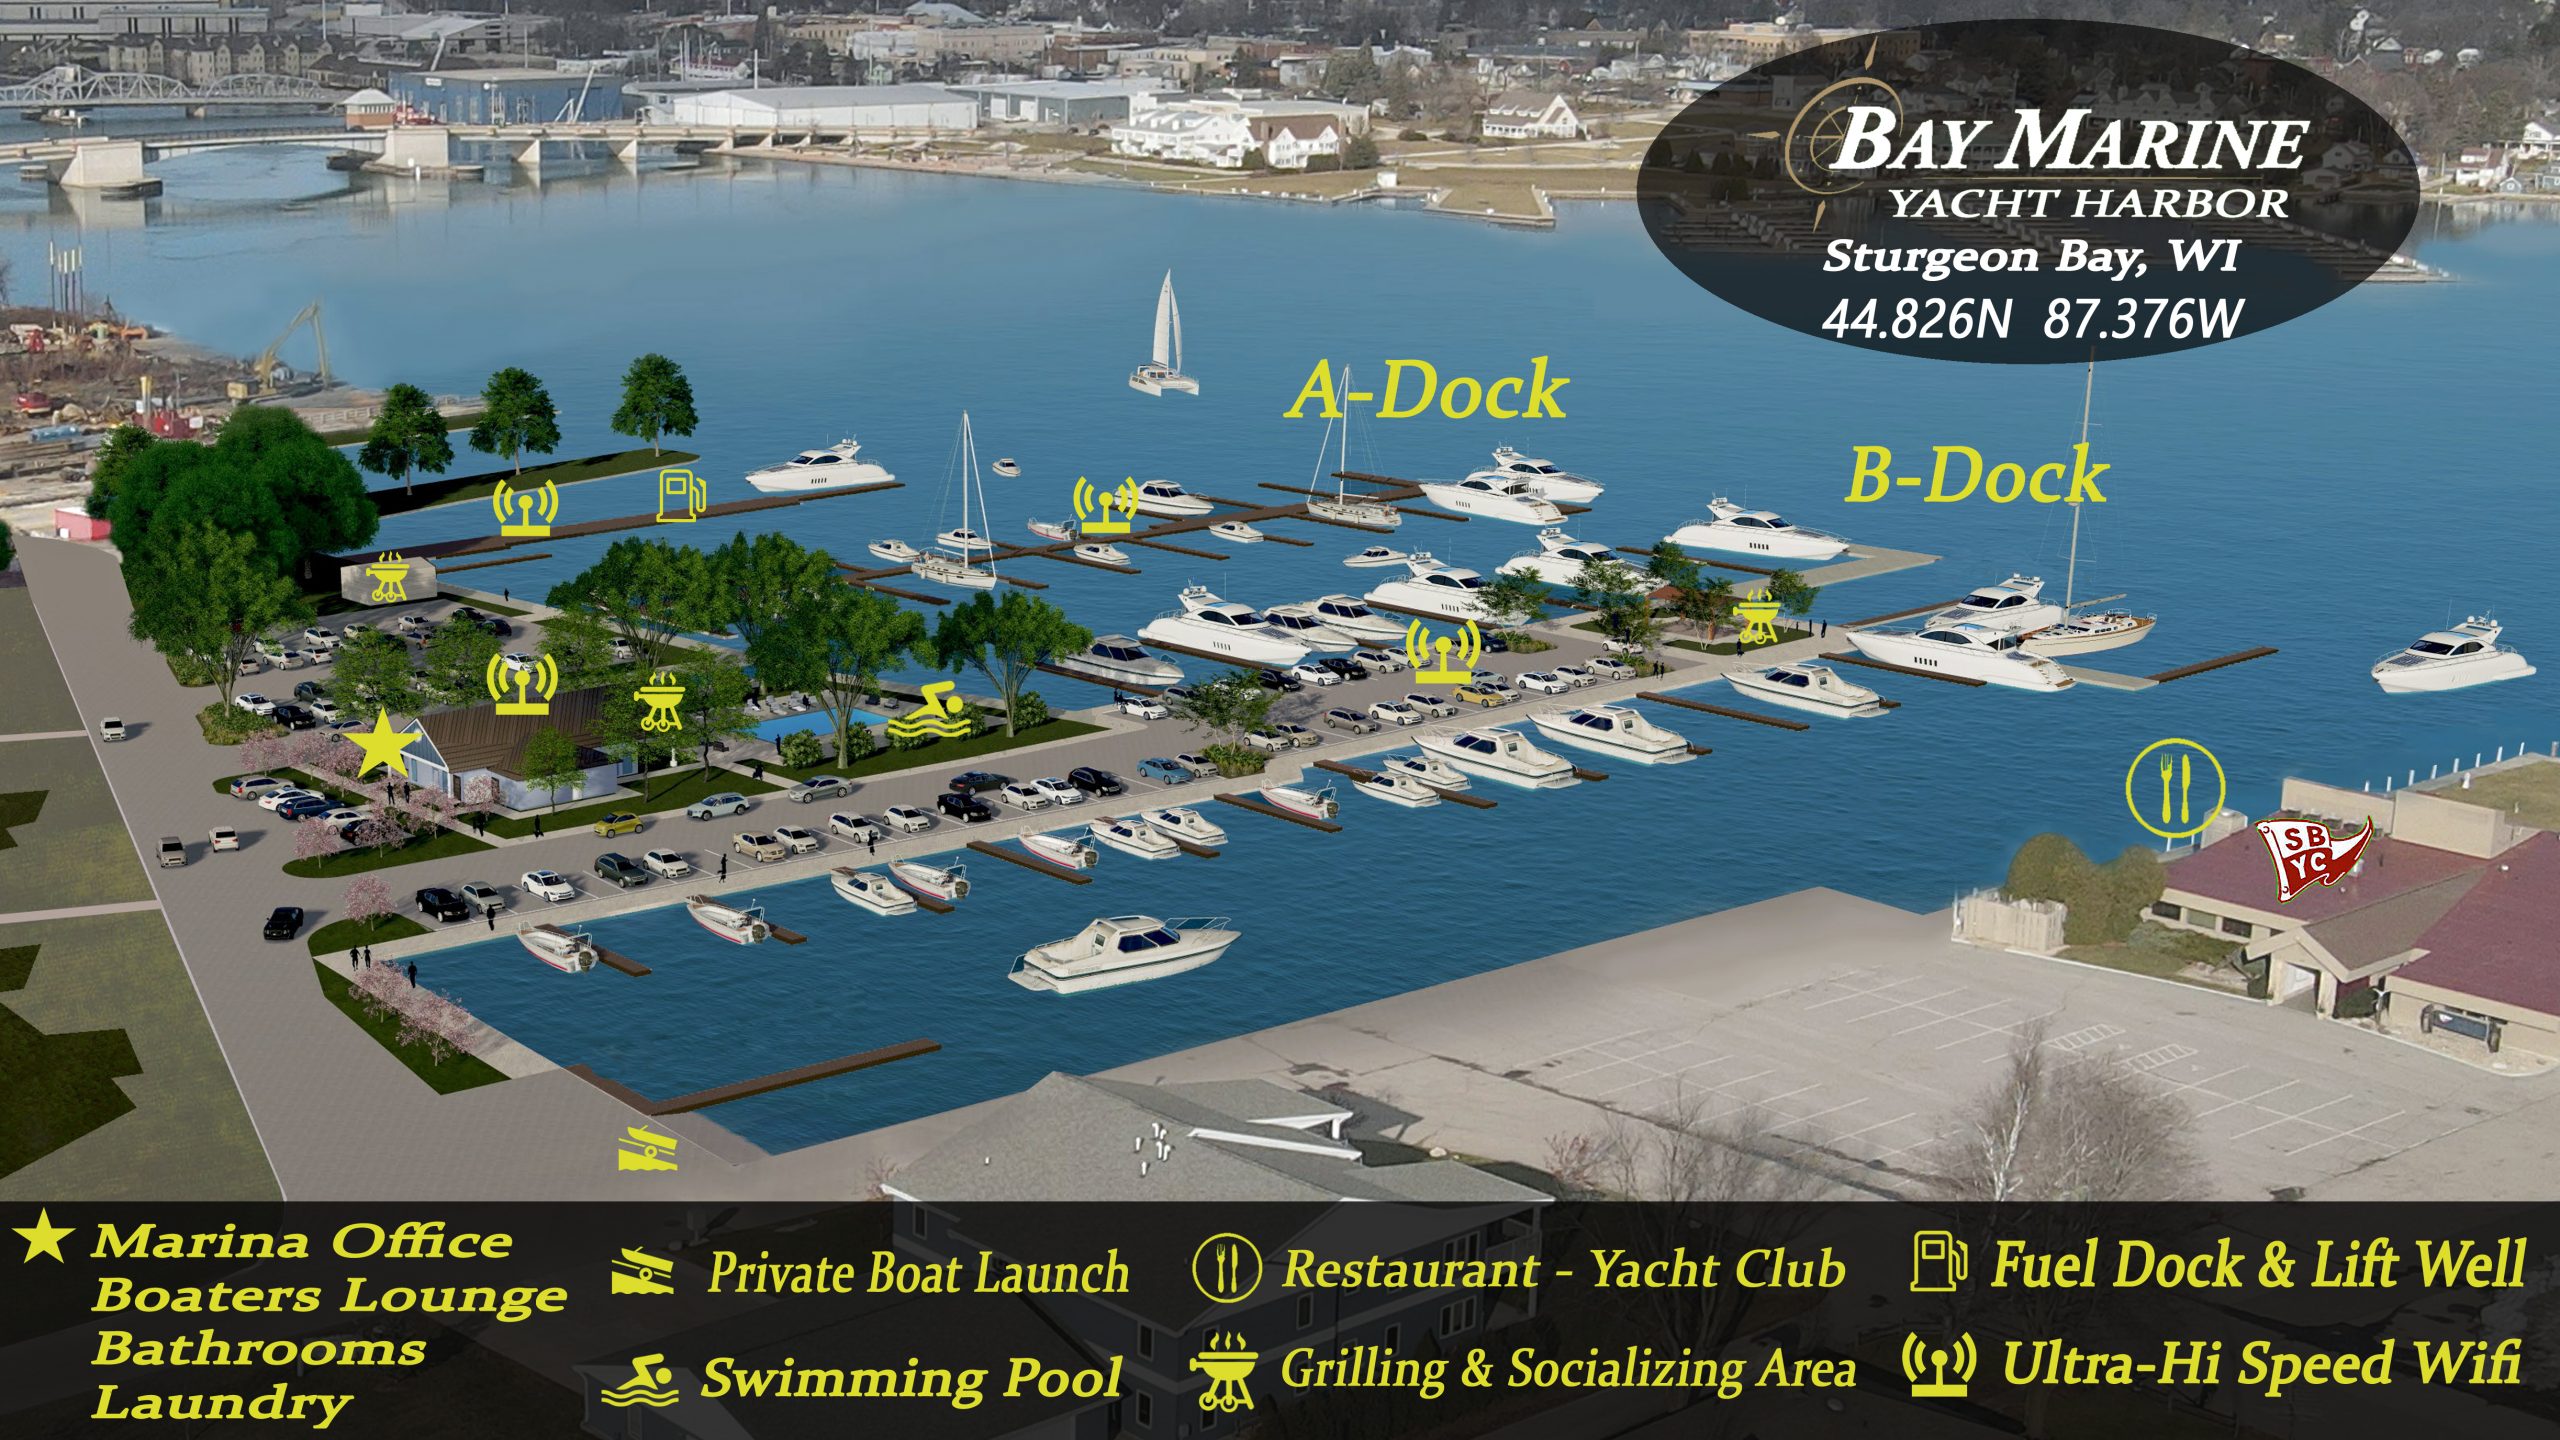 Bay Marine Yacht Harbor Rendering V3b